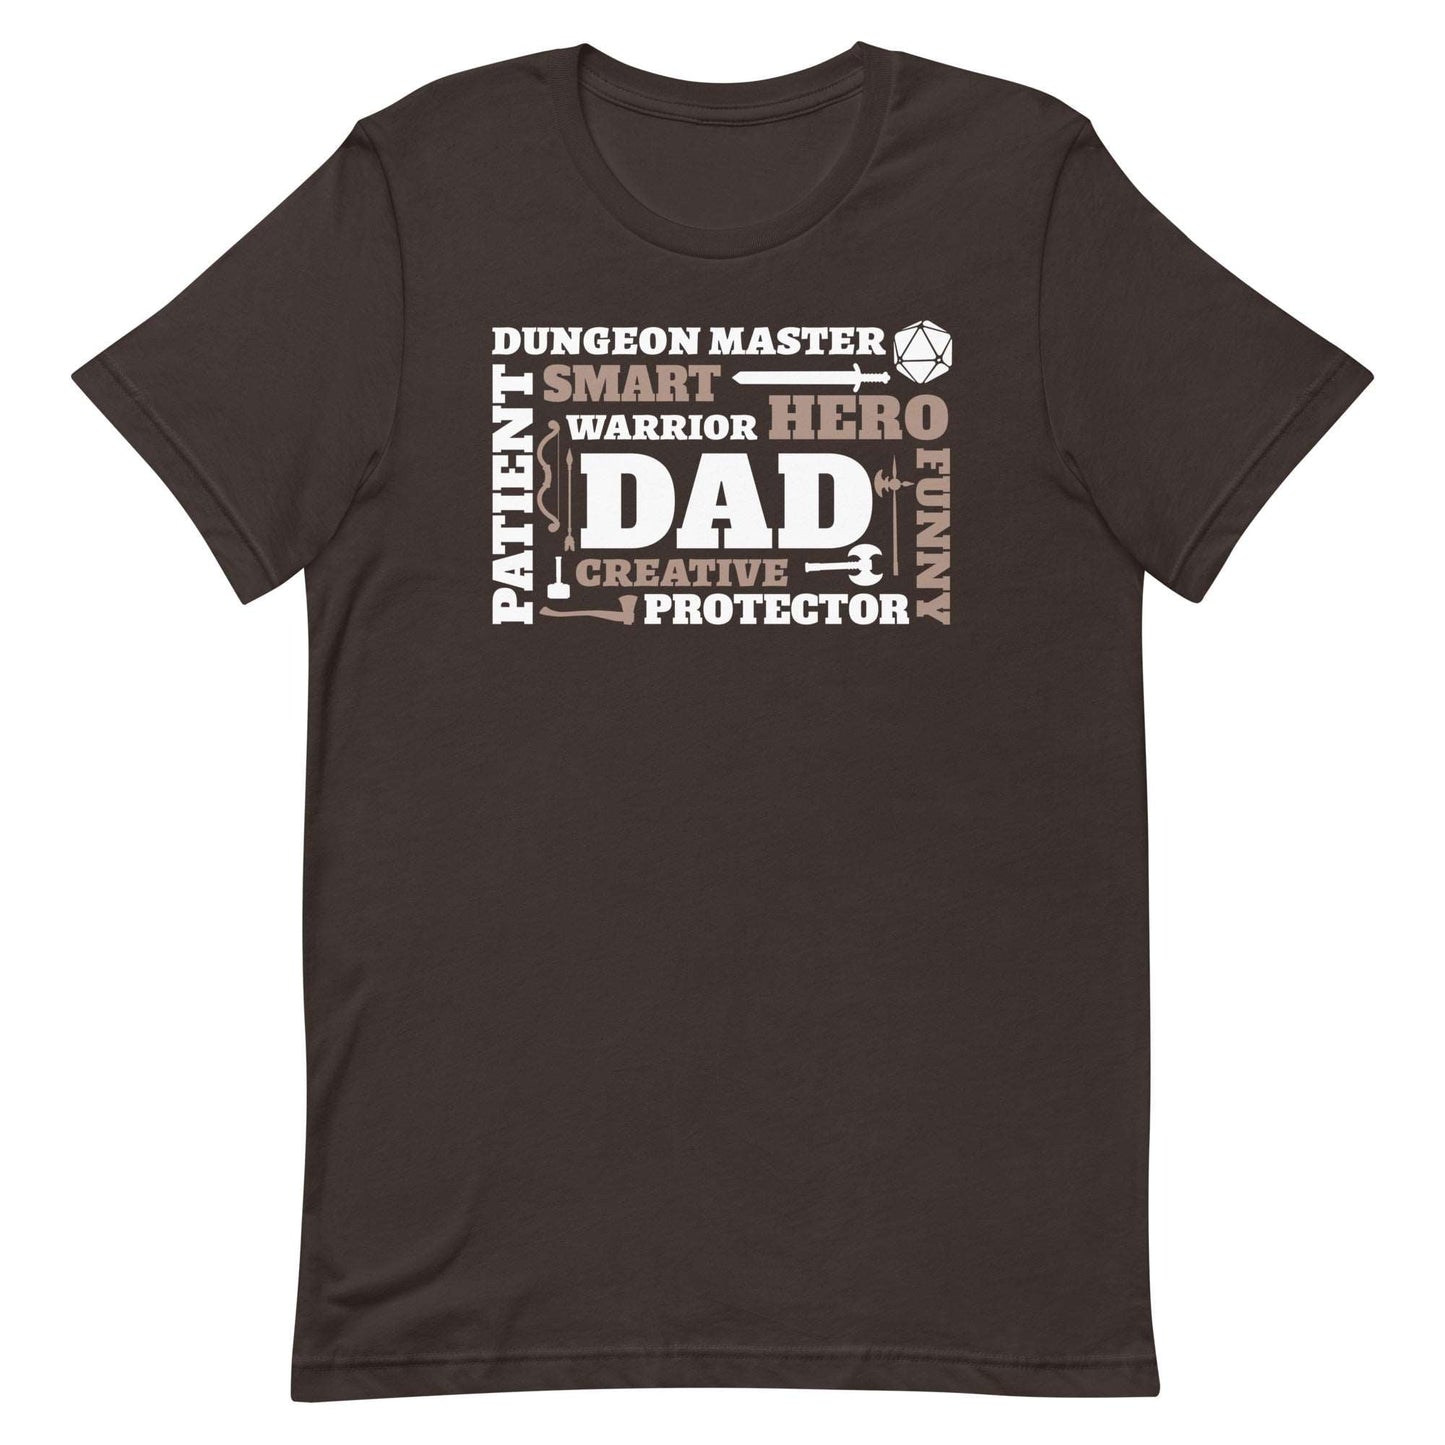 DnD Dad Adjectives Shirt Tshirt Brown / S